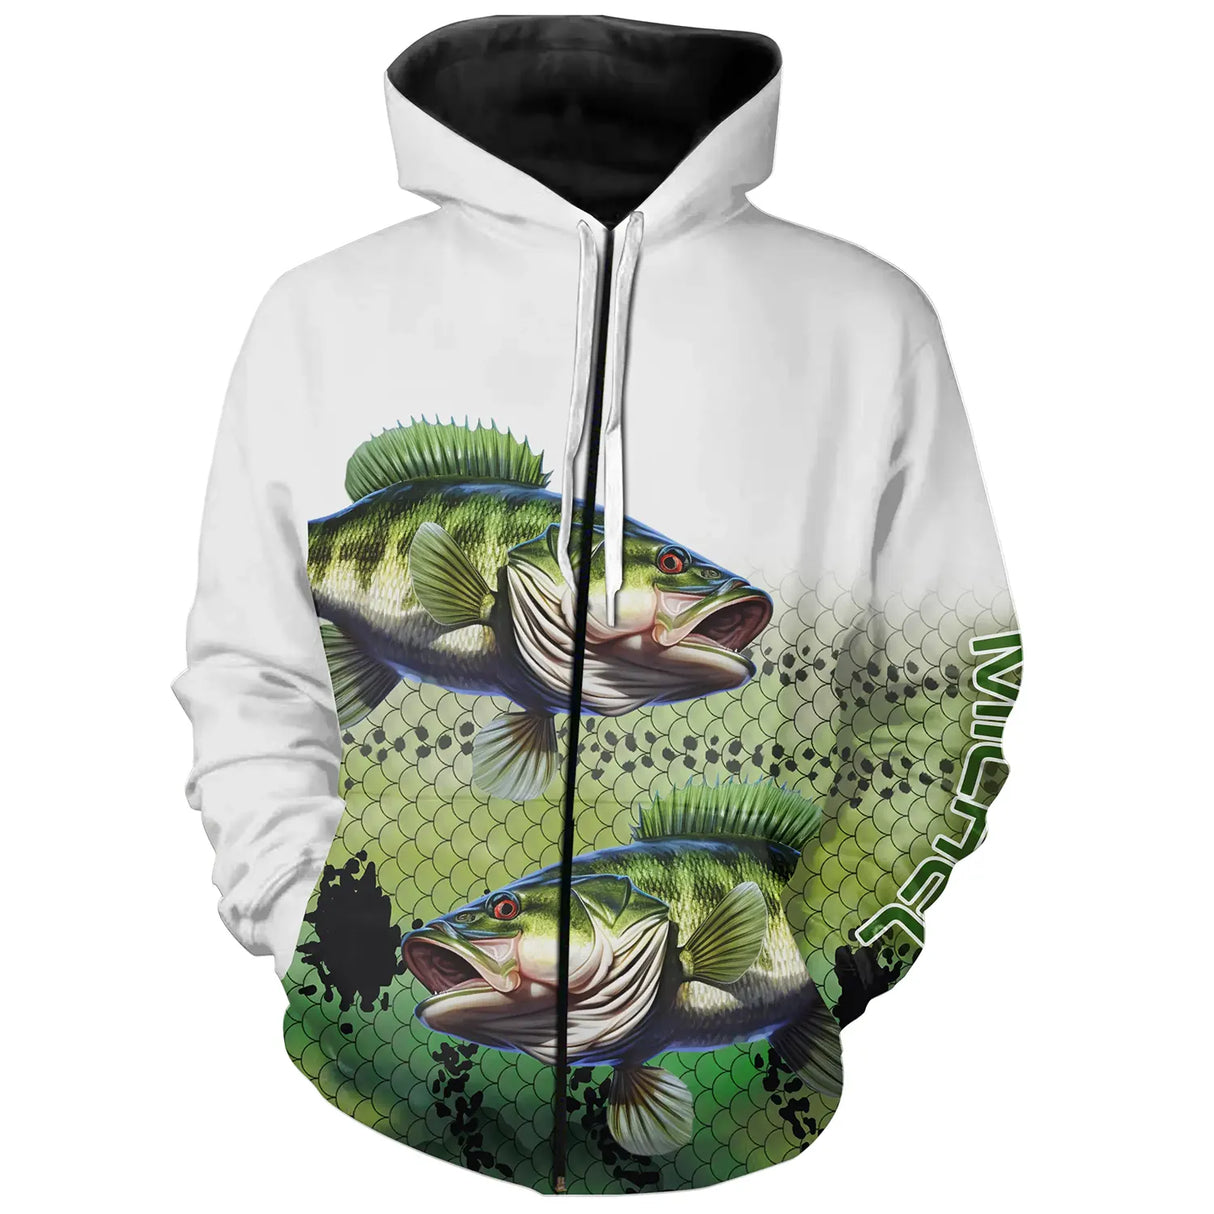 Camiseta personalizada anti-UV Pesca de lubina, Idea de regalo de pescador - CT06082224